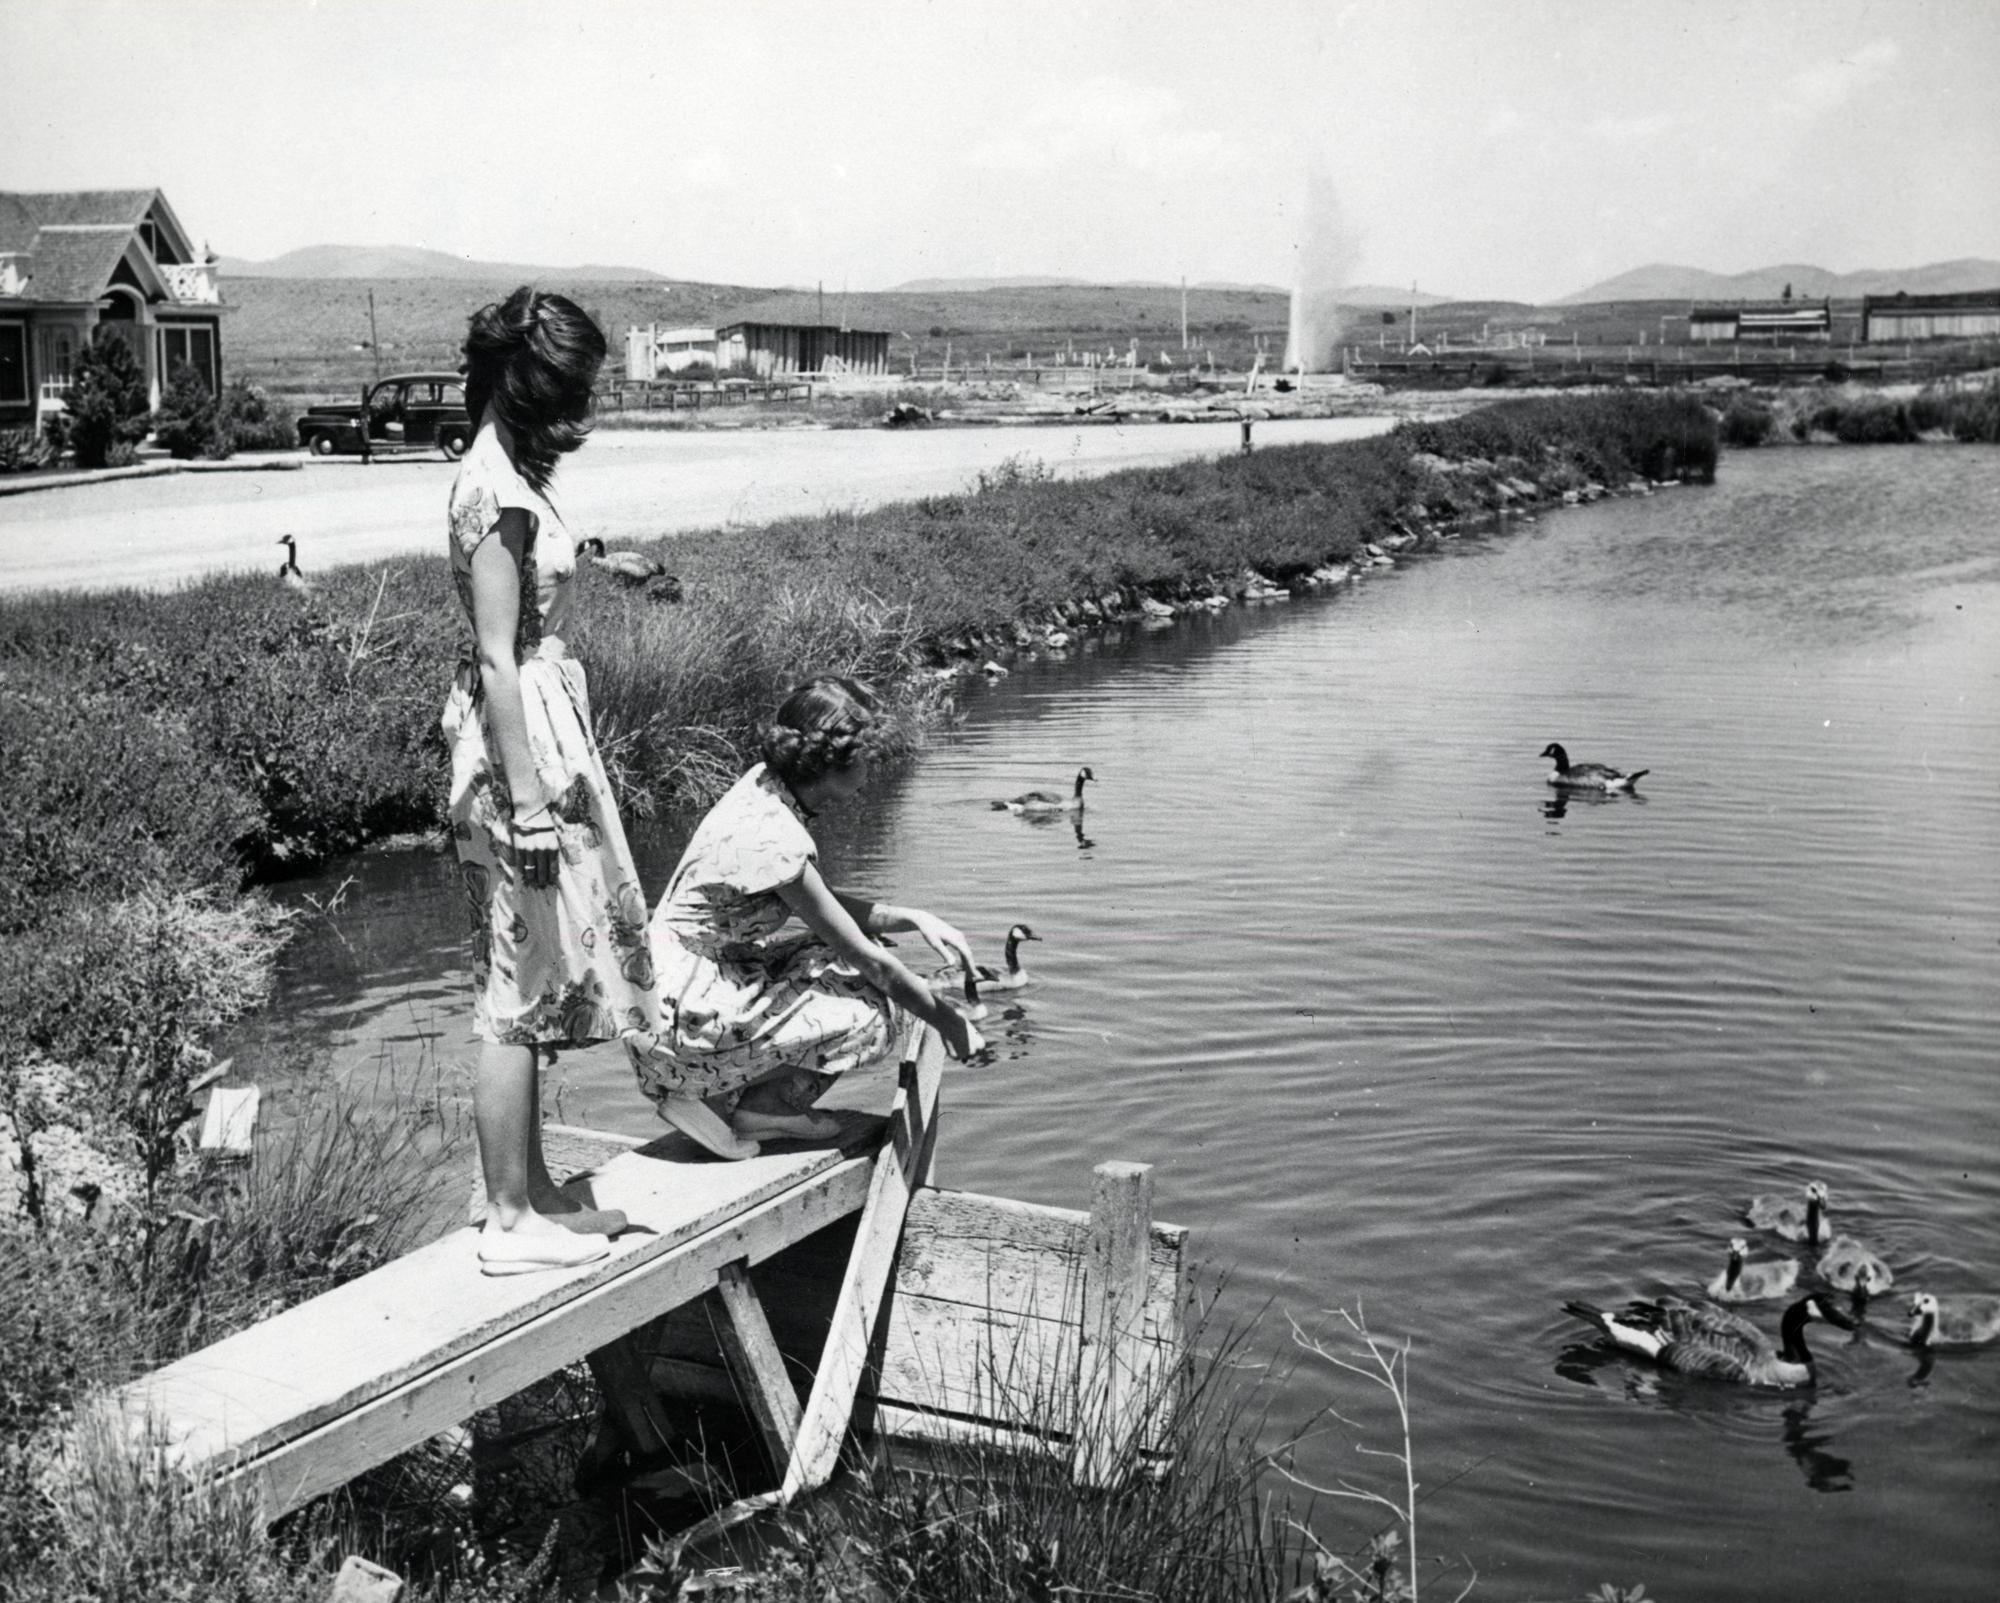 Geyser at a hot springs near Lakeview, circa 1940